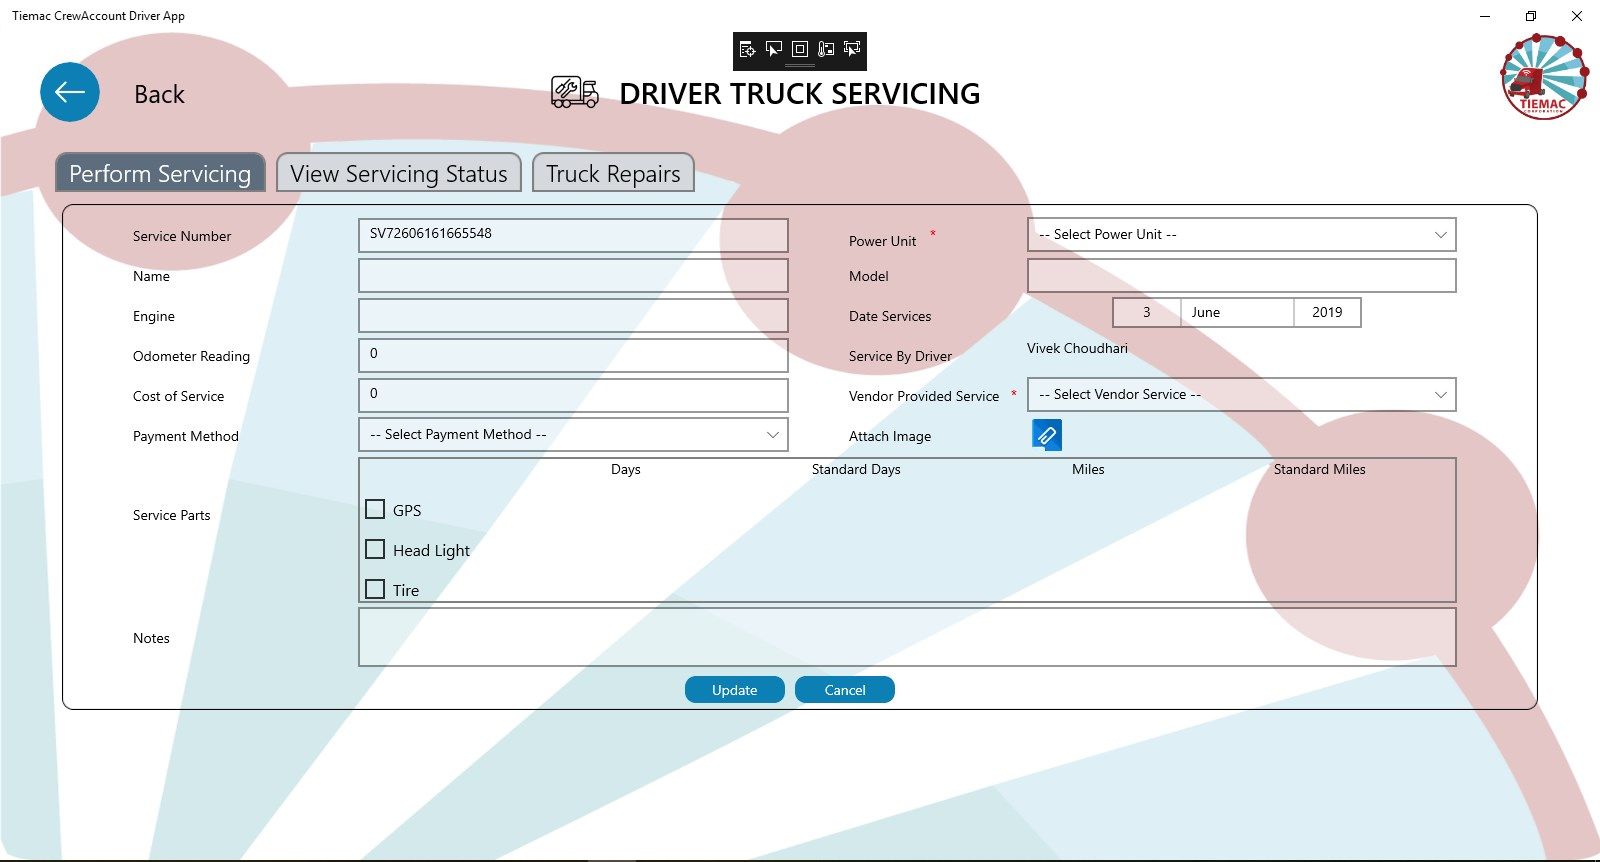 Driver Truck Servicing - Home screen